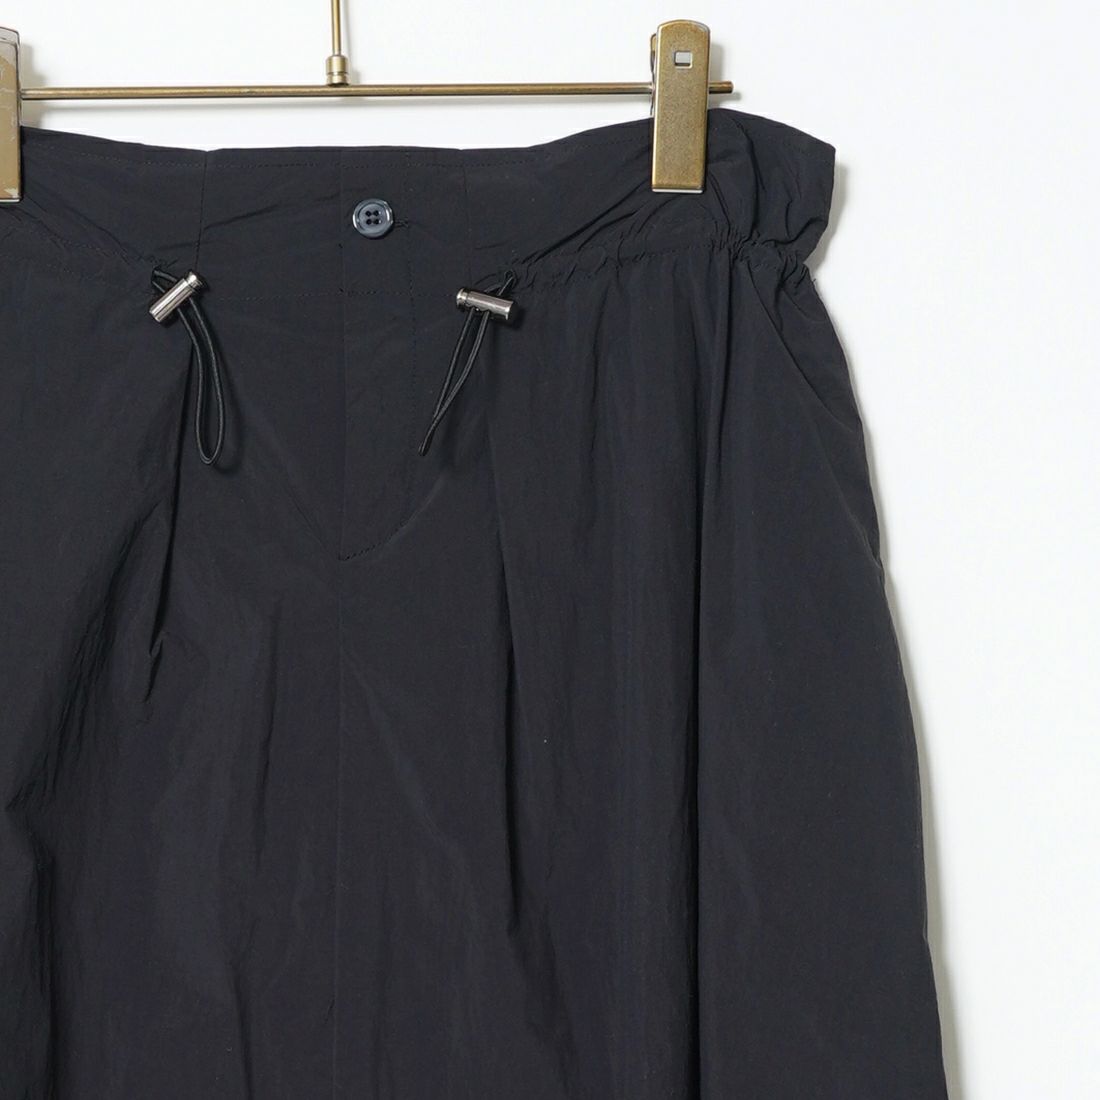 Jeans Factory Clothes [ジーンズファクトリークローズ] ドローコードギャザースカート [21241062] 004 ﾌﾞﾗｯｸ